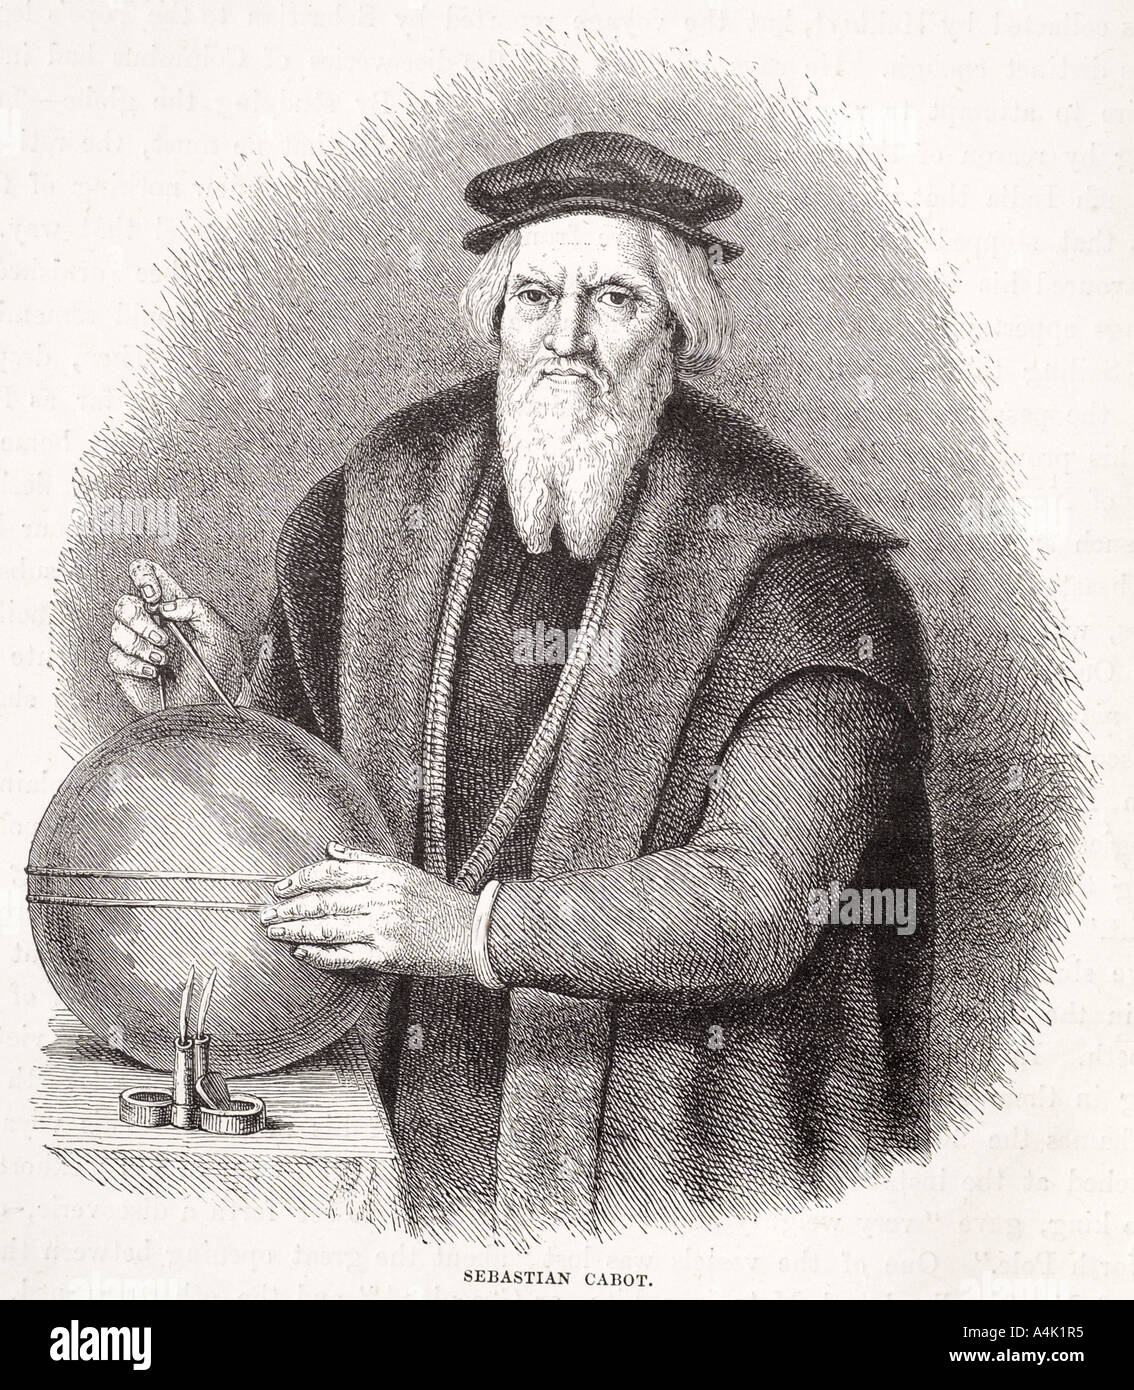 Sebastian cabot F Rawle 1474 1557 Venetian scoperto il Canada cartografo navigator map maker ritratto globo explorer marine nau Foto Stock